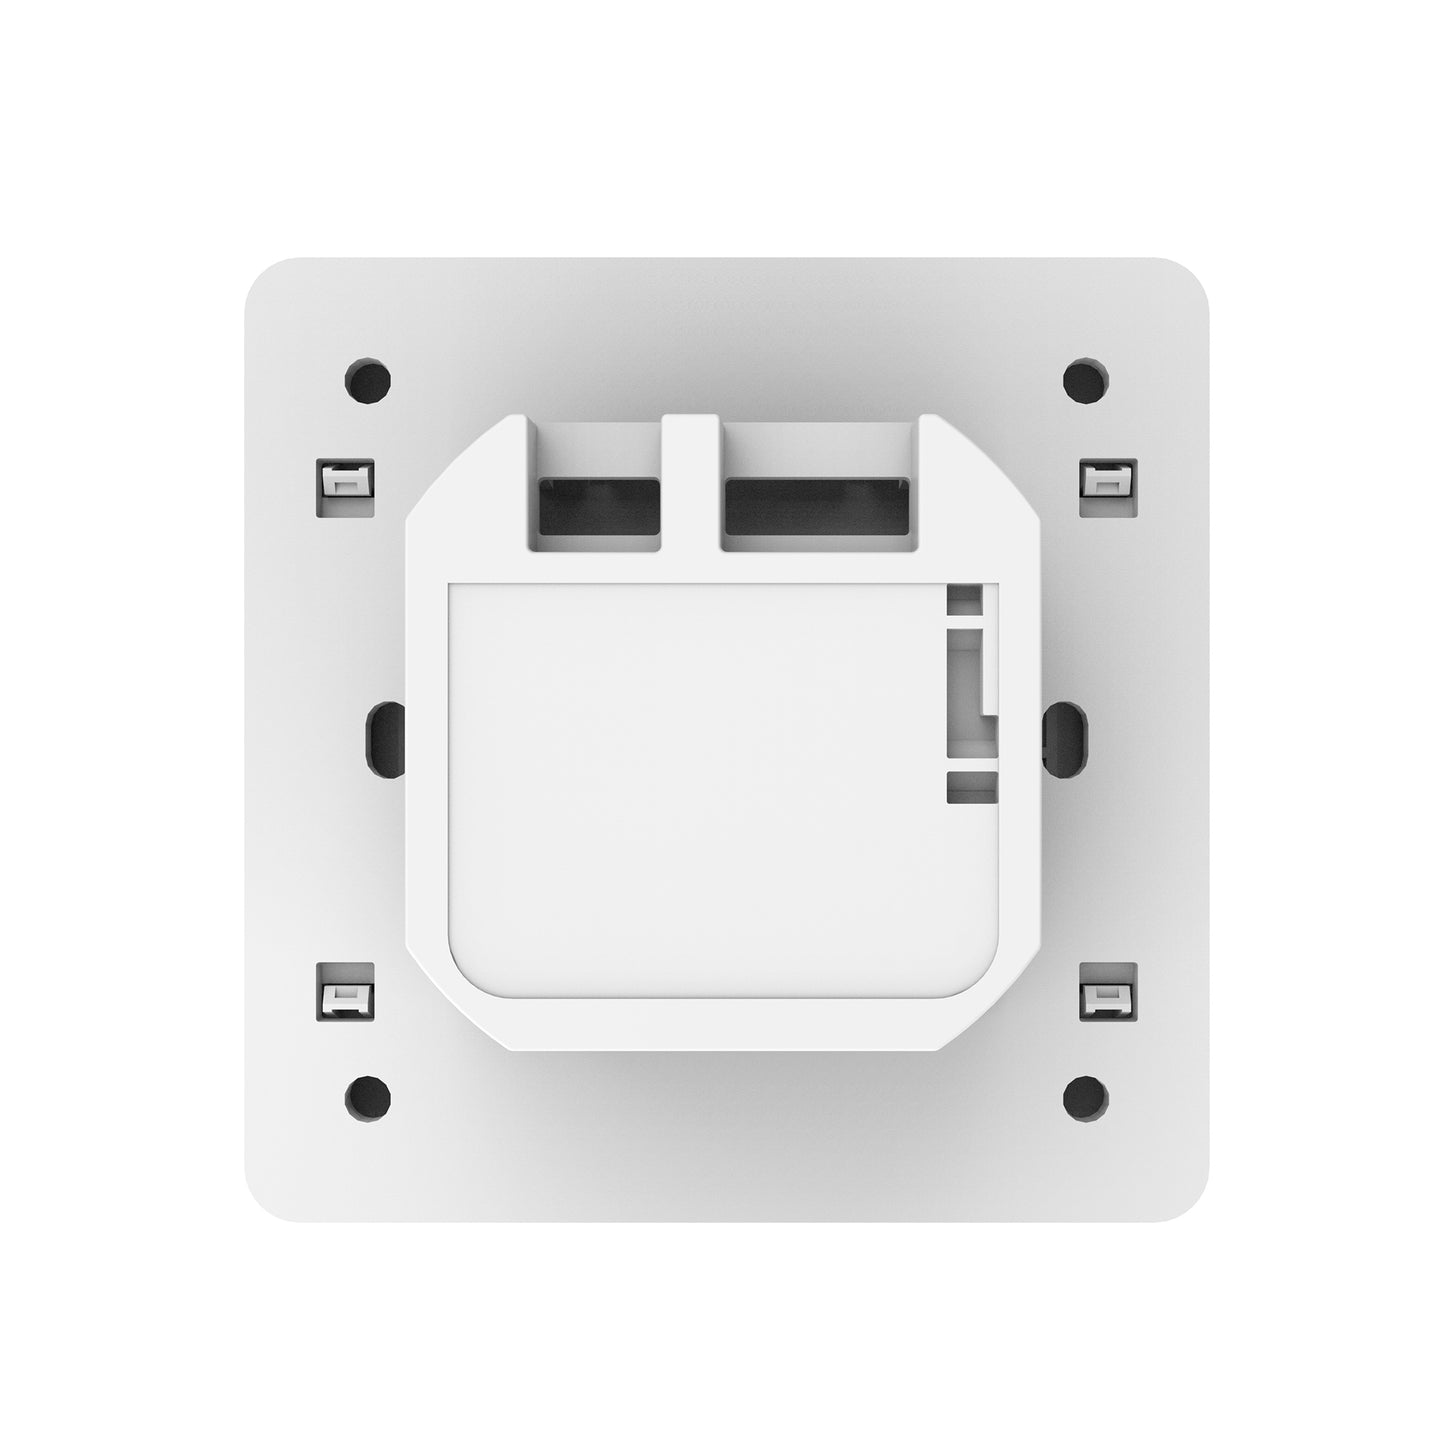 EU Smart Zigbee light switch